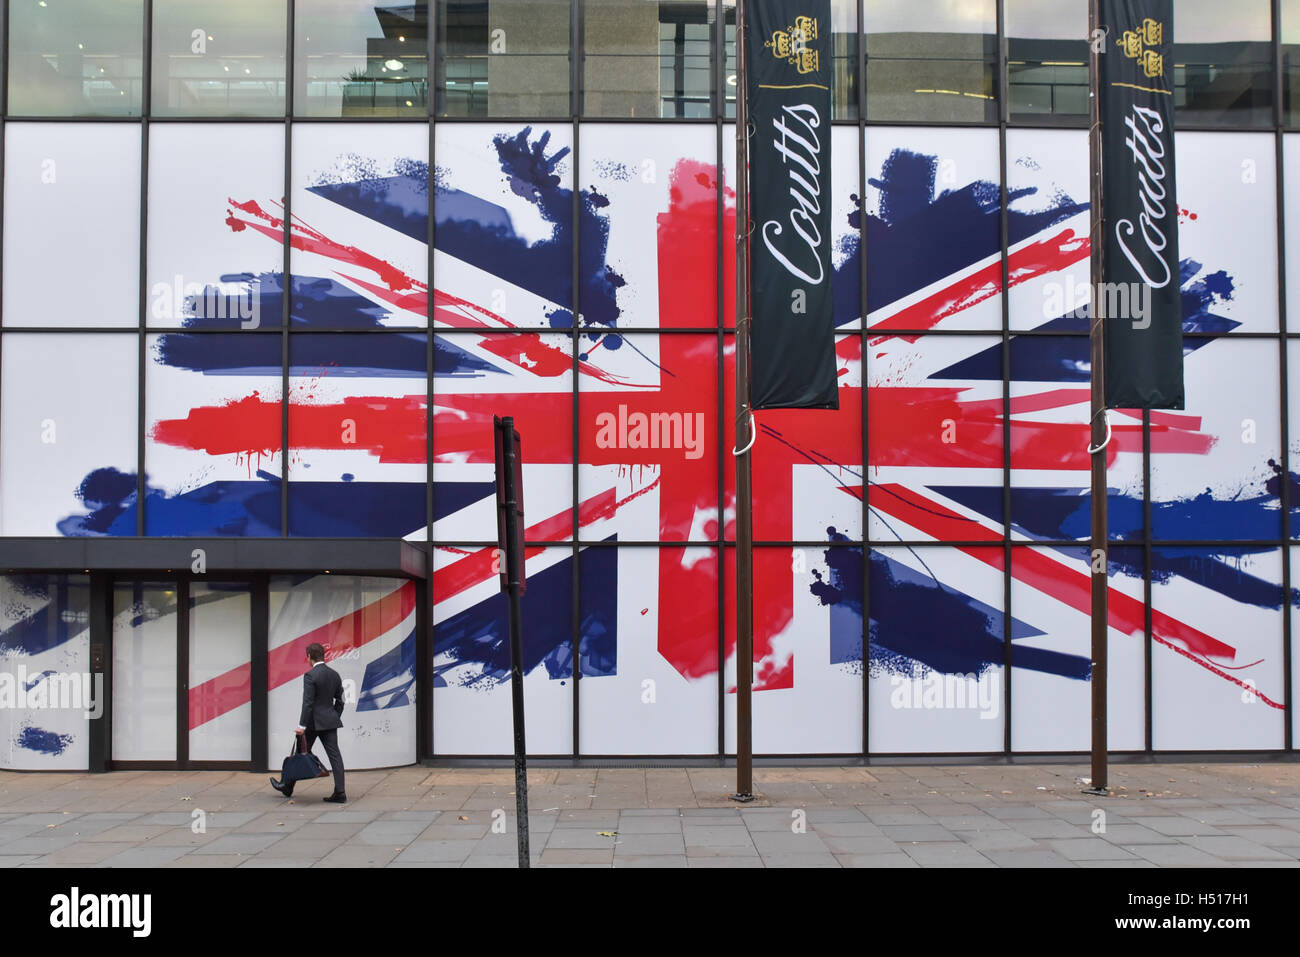 Strand, Londres, Reino Unido. 19 de octubre de 2016. Coutts Bank tiene una gigantesca bandera Union Jack a través de las ventanas. © Matthew Chattle/Alamy Live Foto de stock